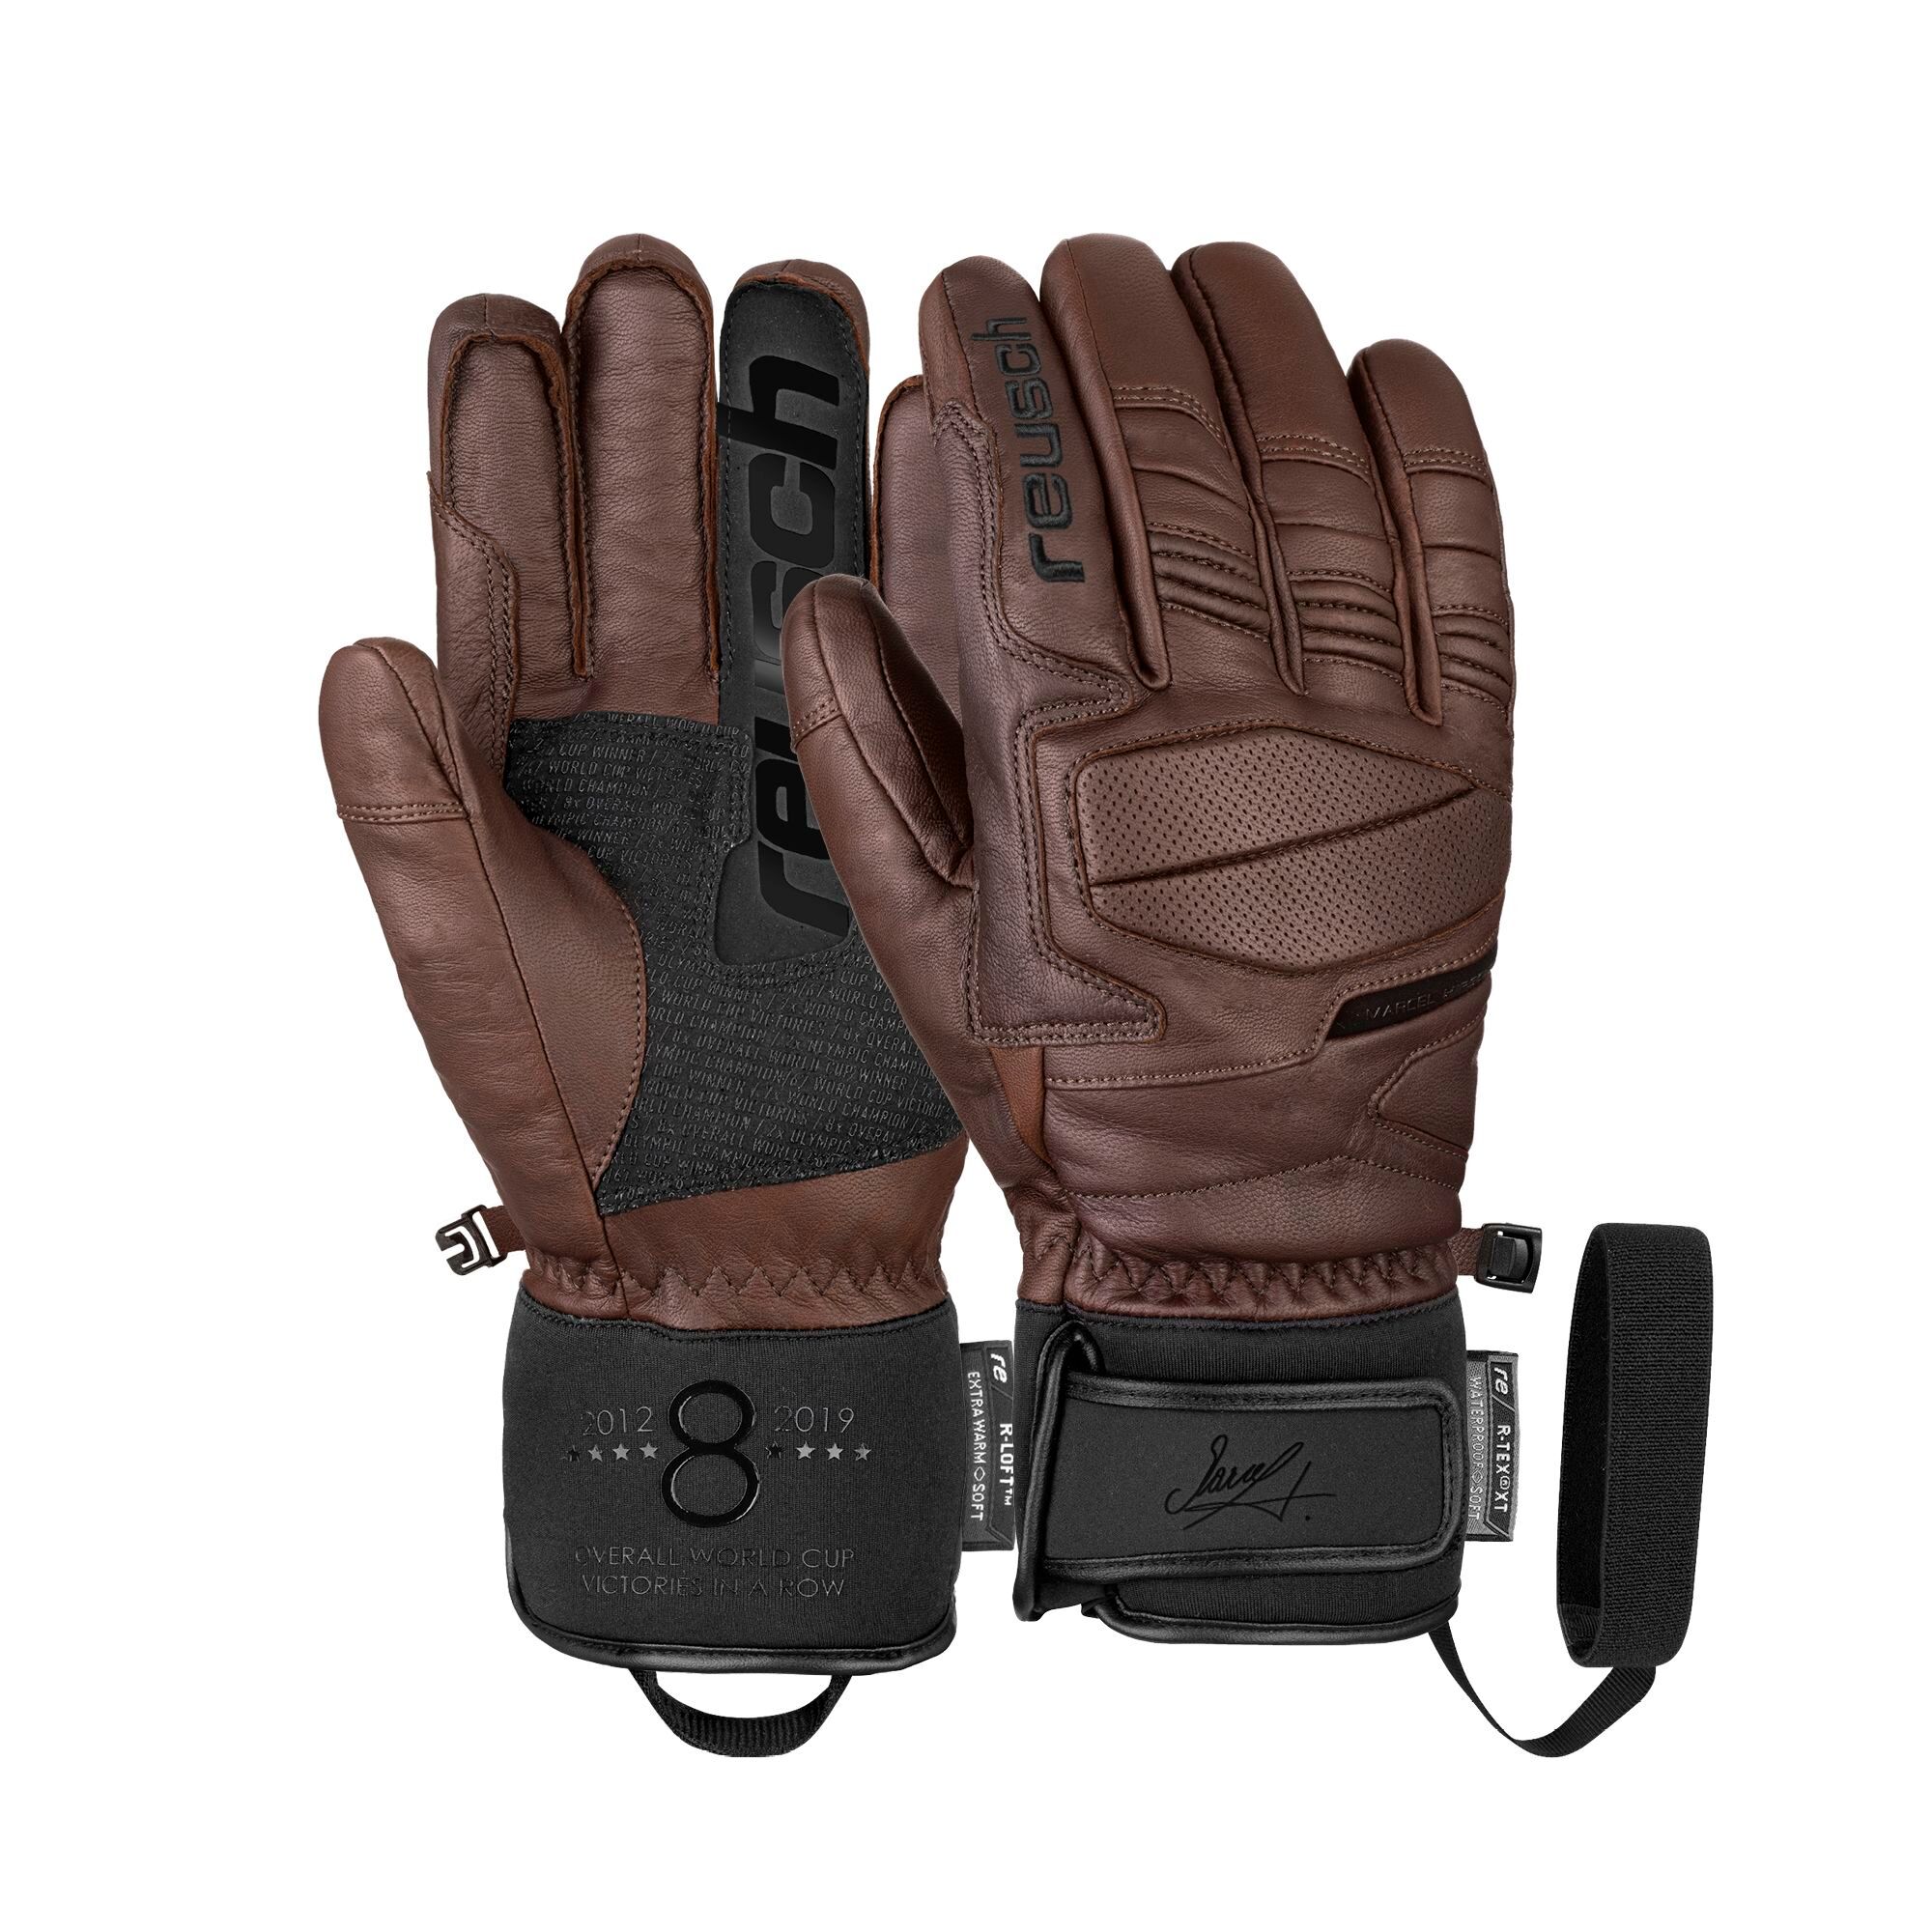 Reusch Marcel Hirscher R-TEX XT - Ski gloves - Men's